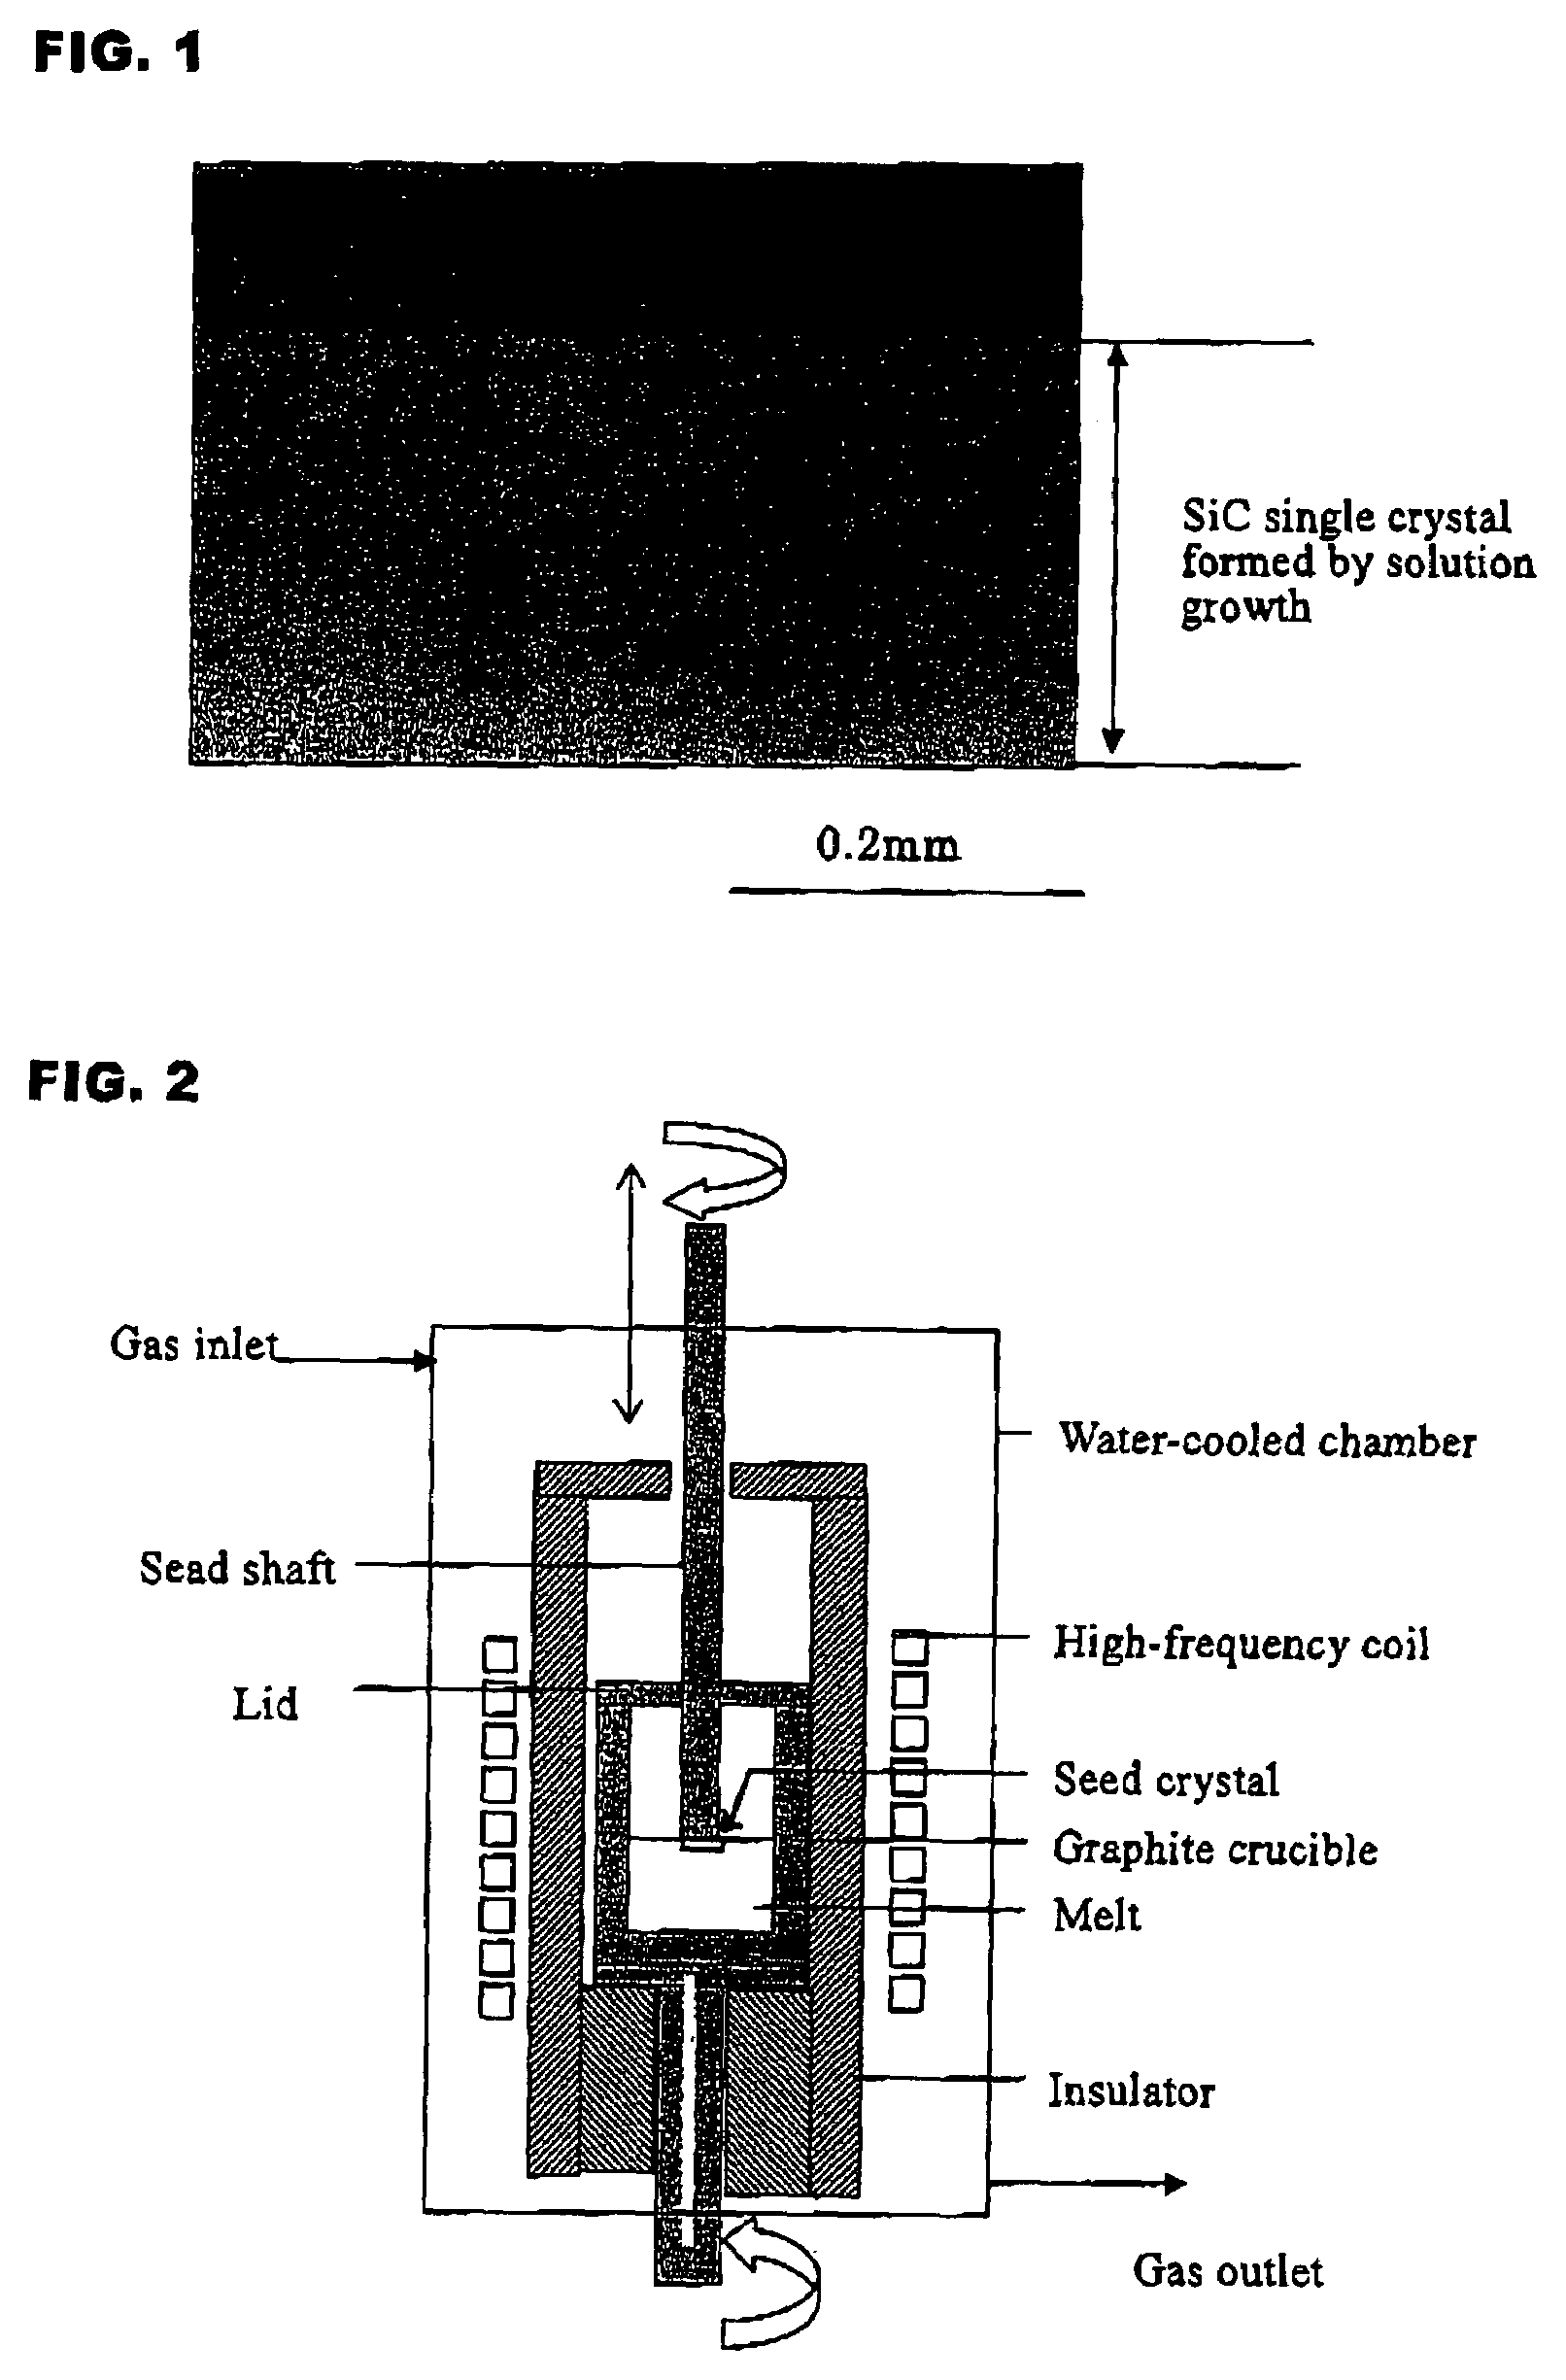 Method for preparing silicon carbide single crystal